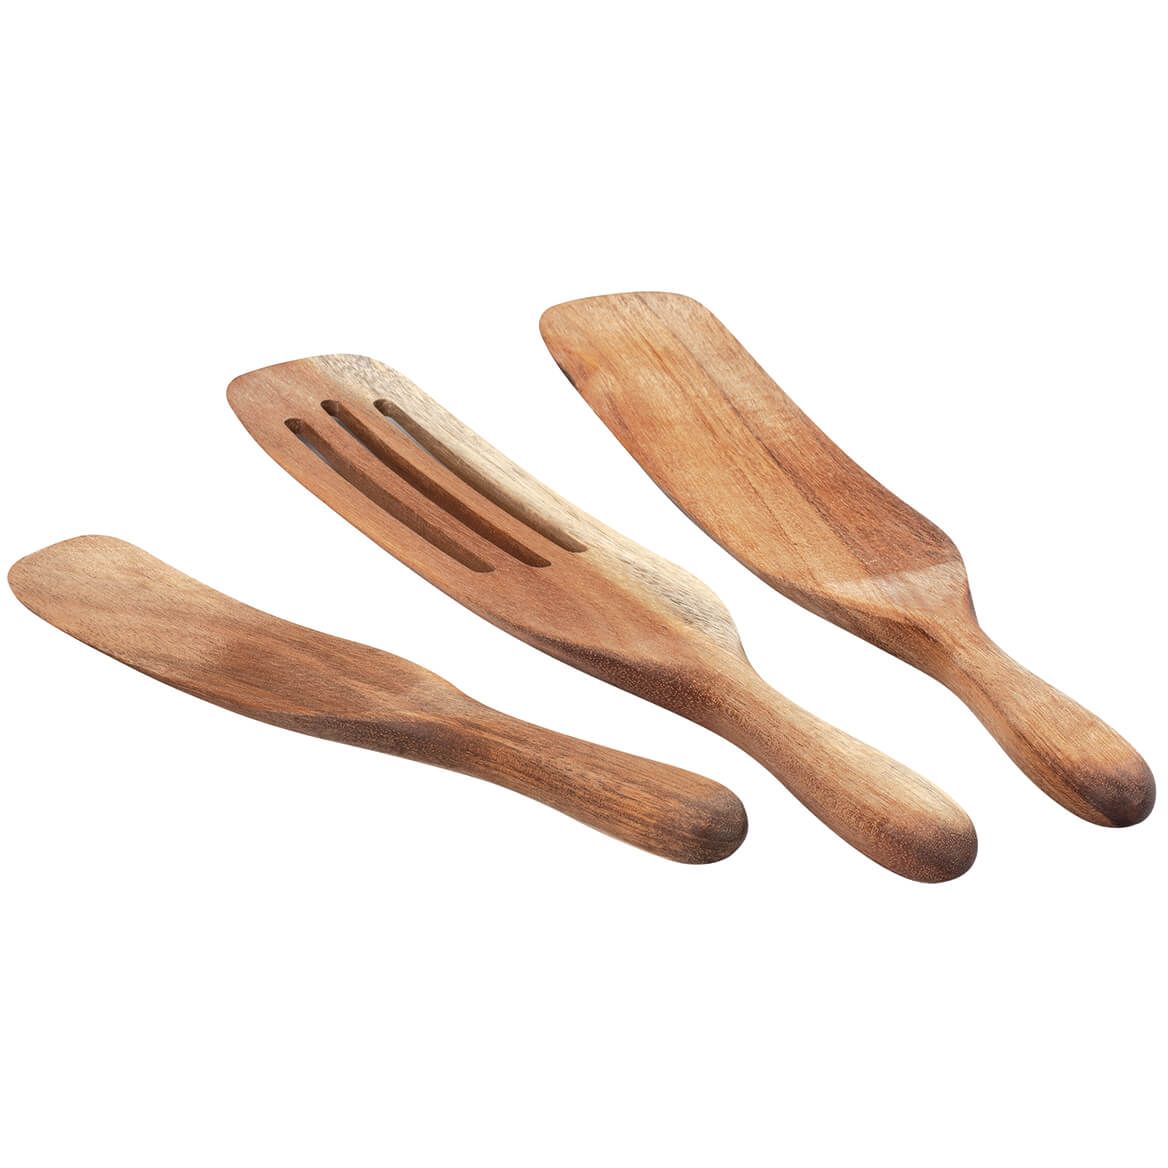 Wood Spurtle Tools, Set of 3 + '-' + 369671